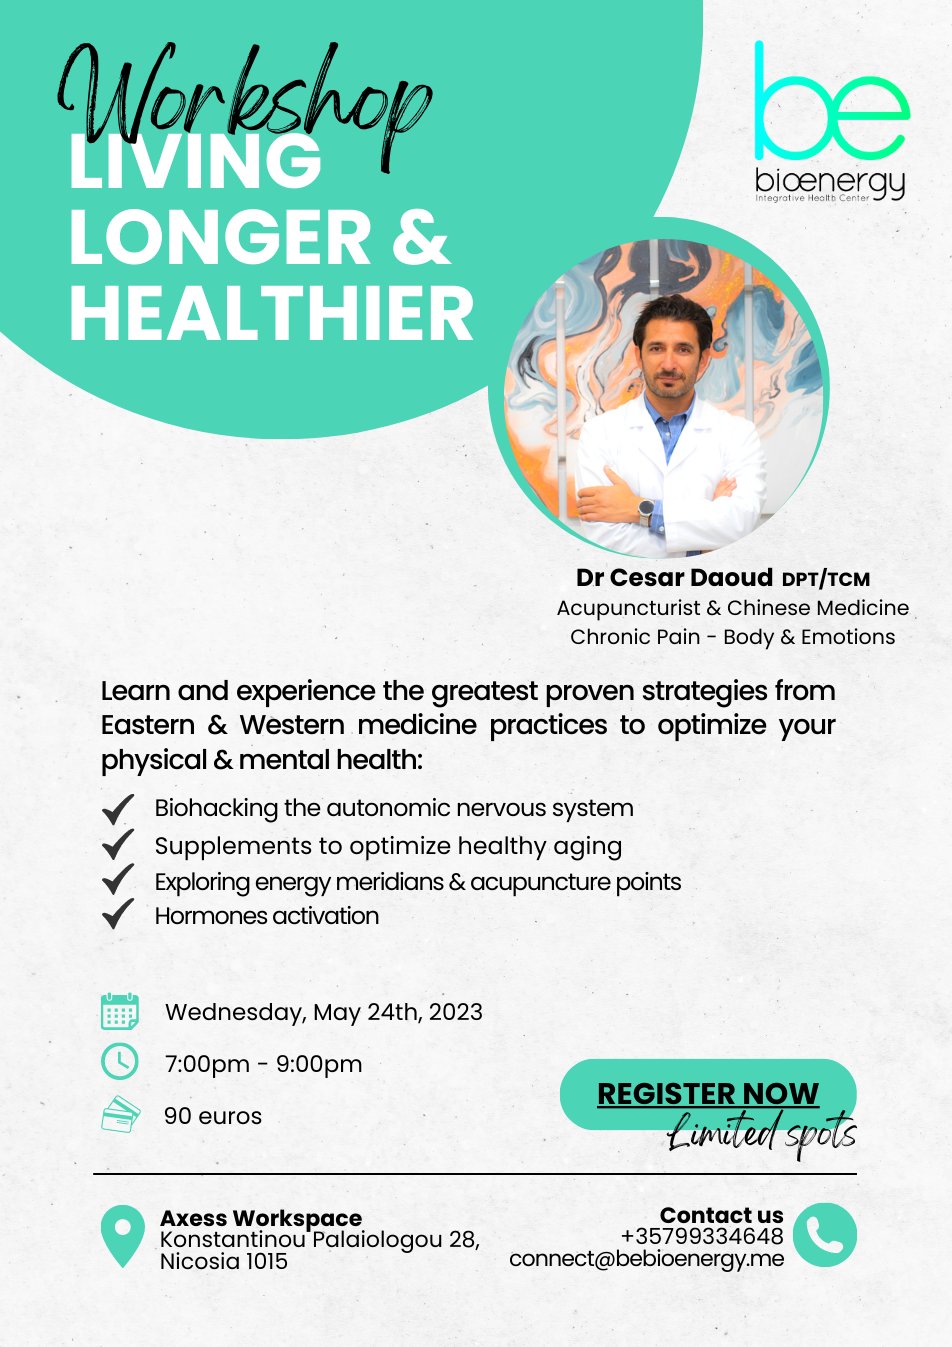 “LIVING LONGER & HEALTHIER” Workshop by Dr Cesar Daoud